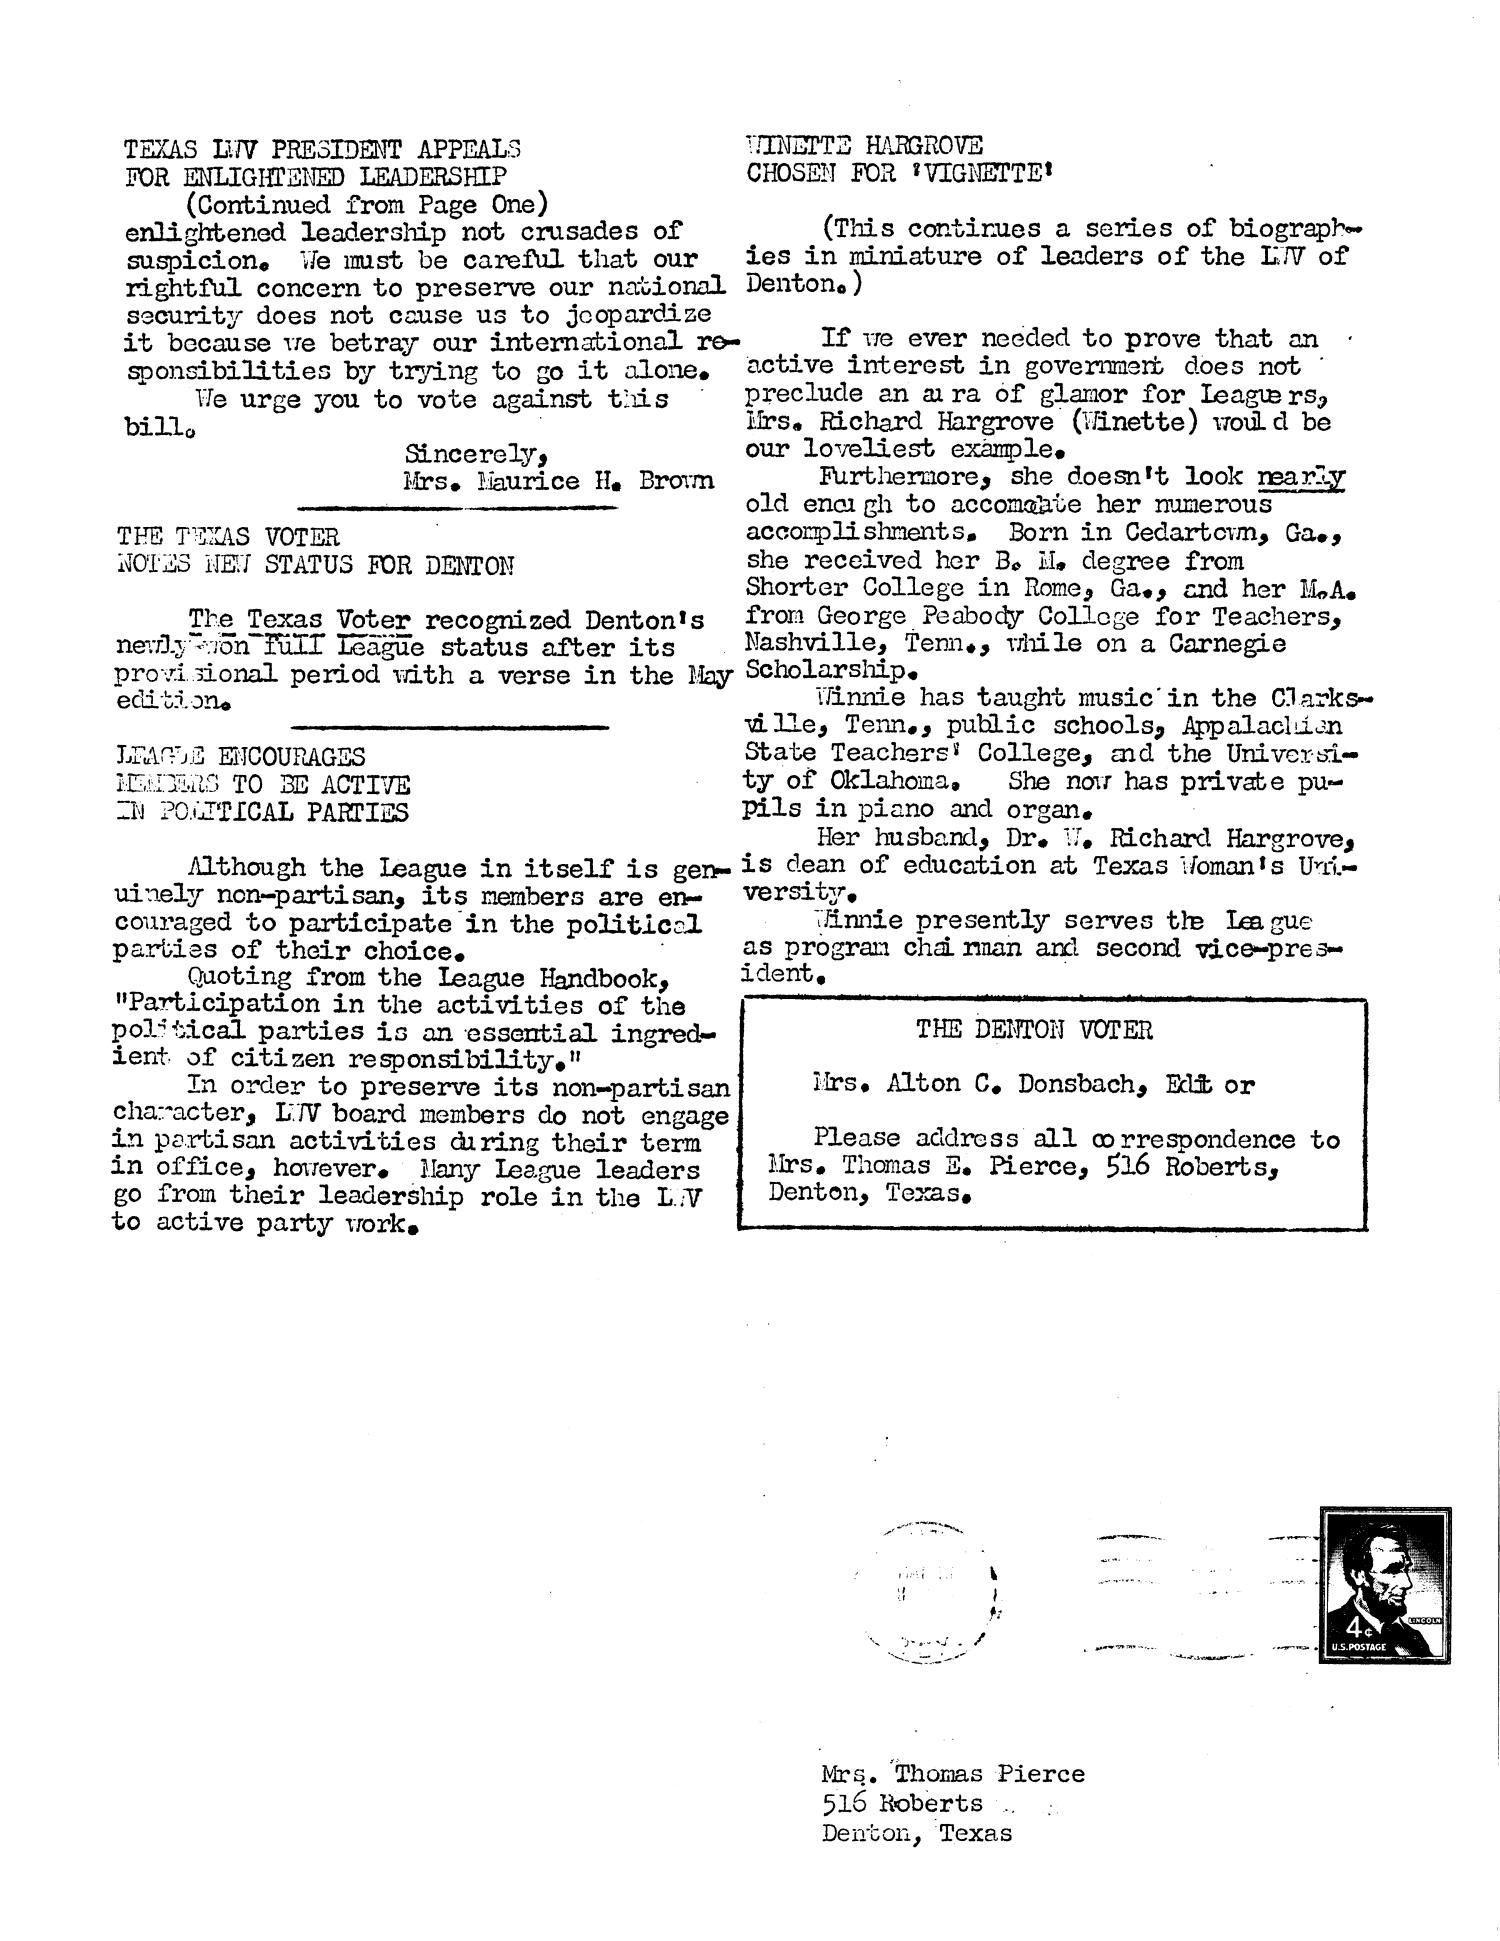 The Denton Voter Newsletter, Volume 03, Number 01, May 9, 1963
                                                
                                                    2
                                                